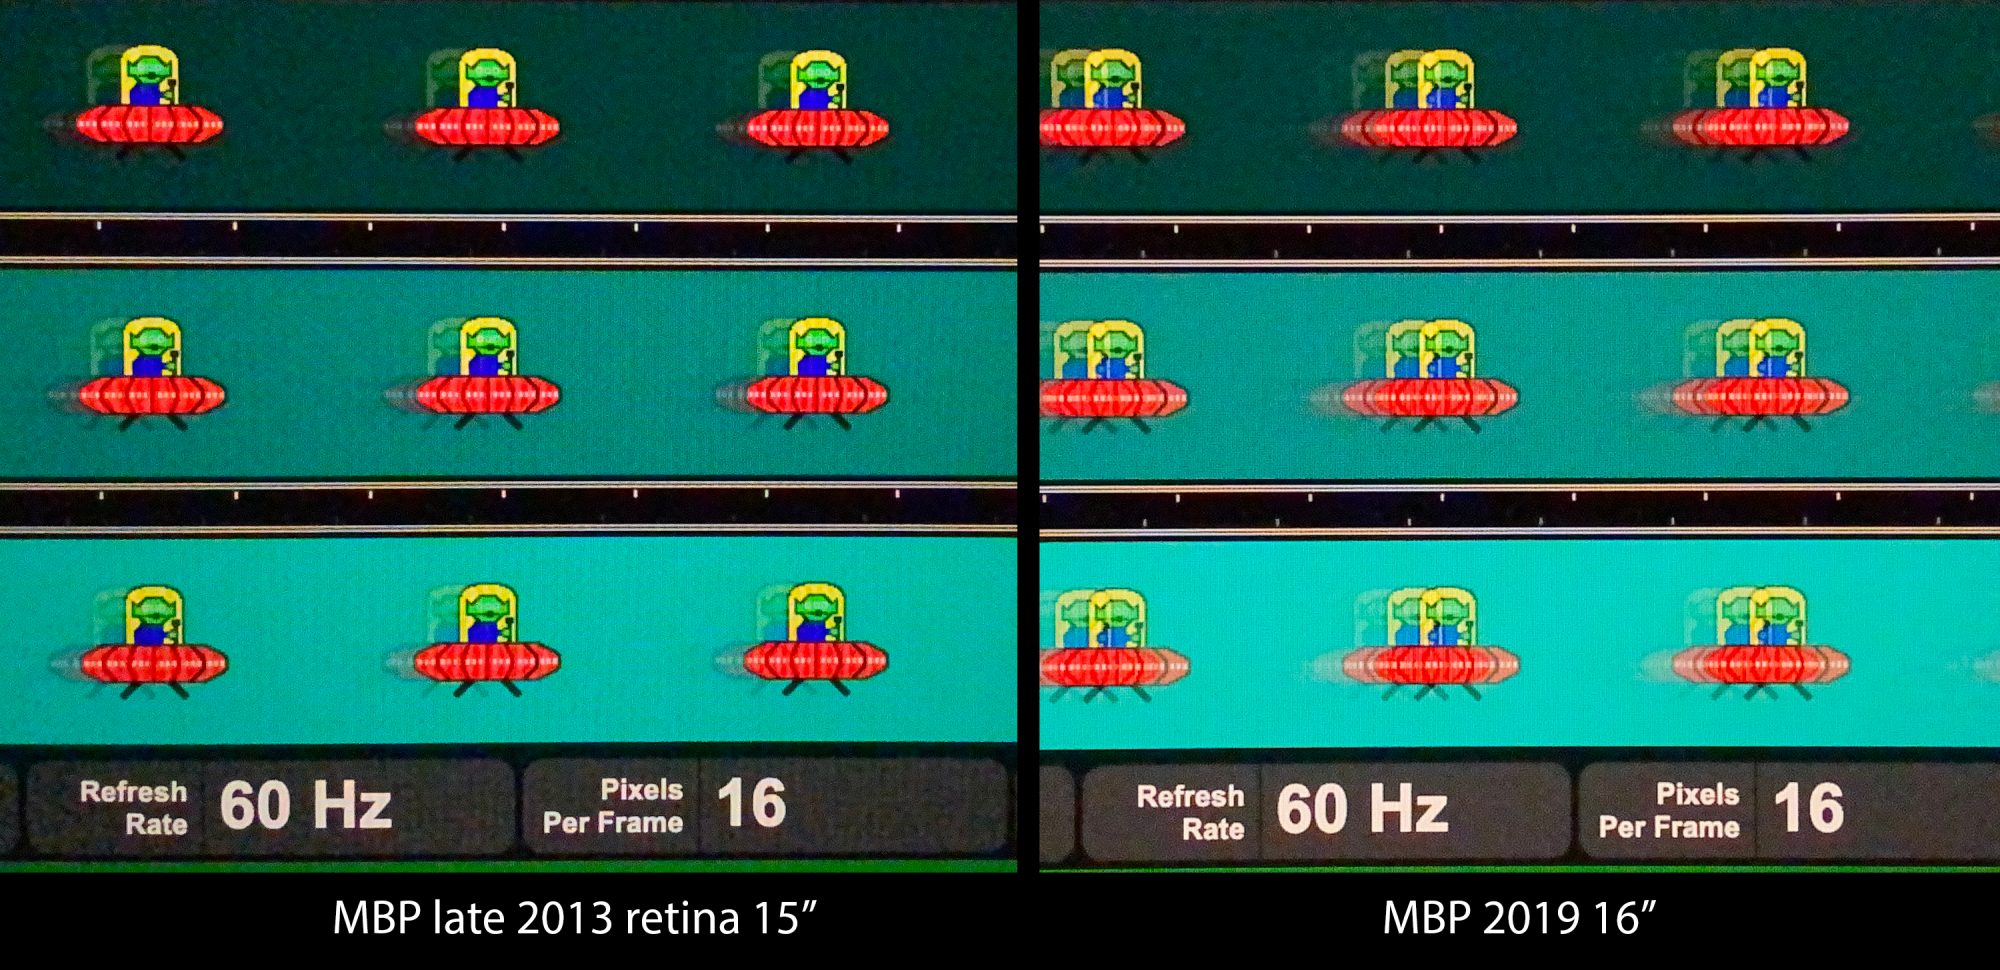 Retina display ghosting test image url orinoco haven